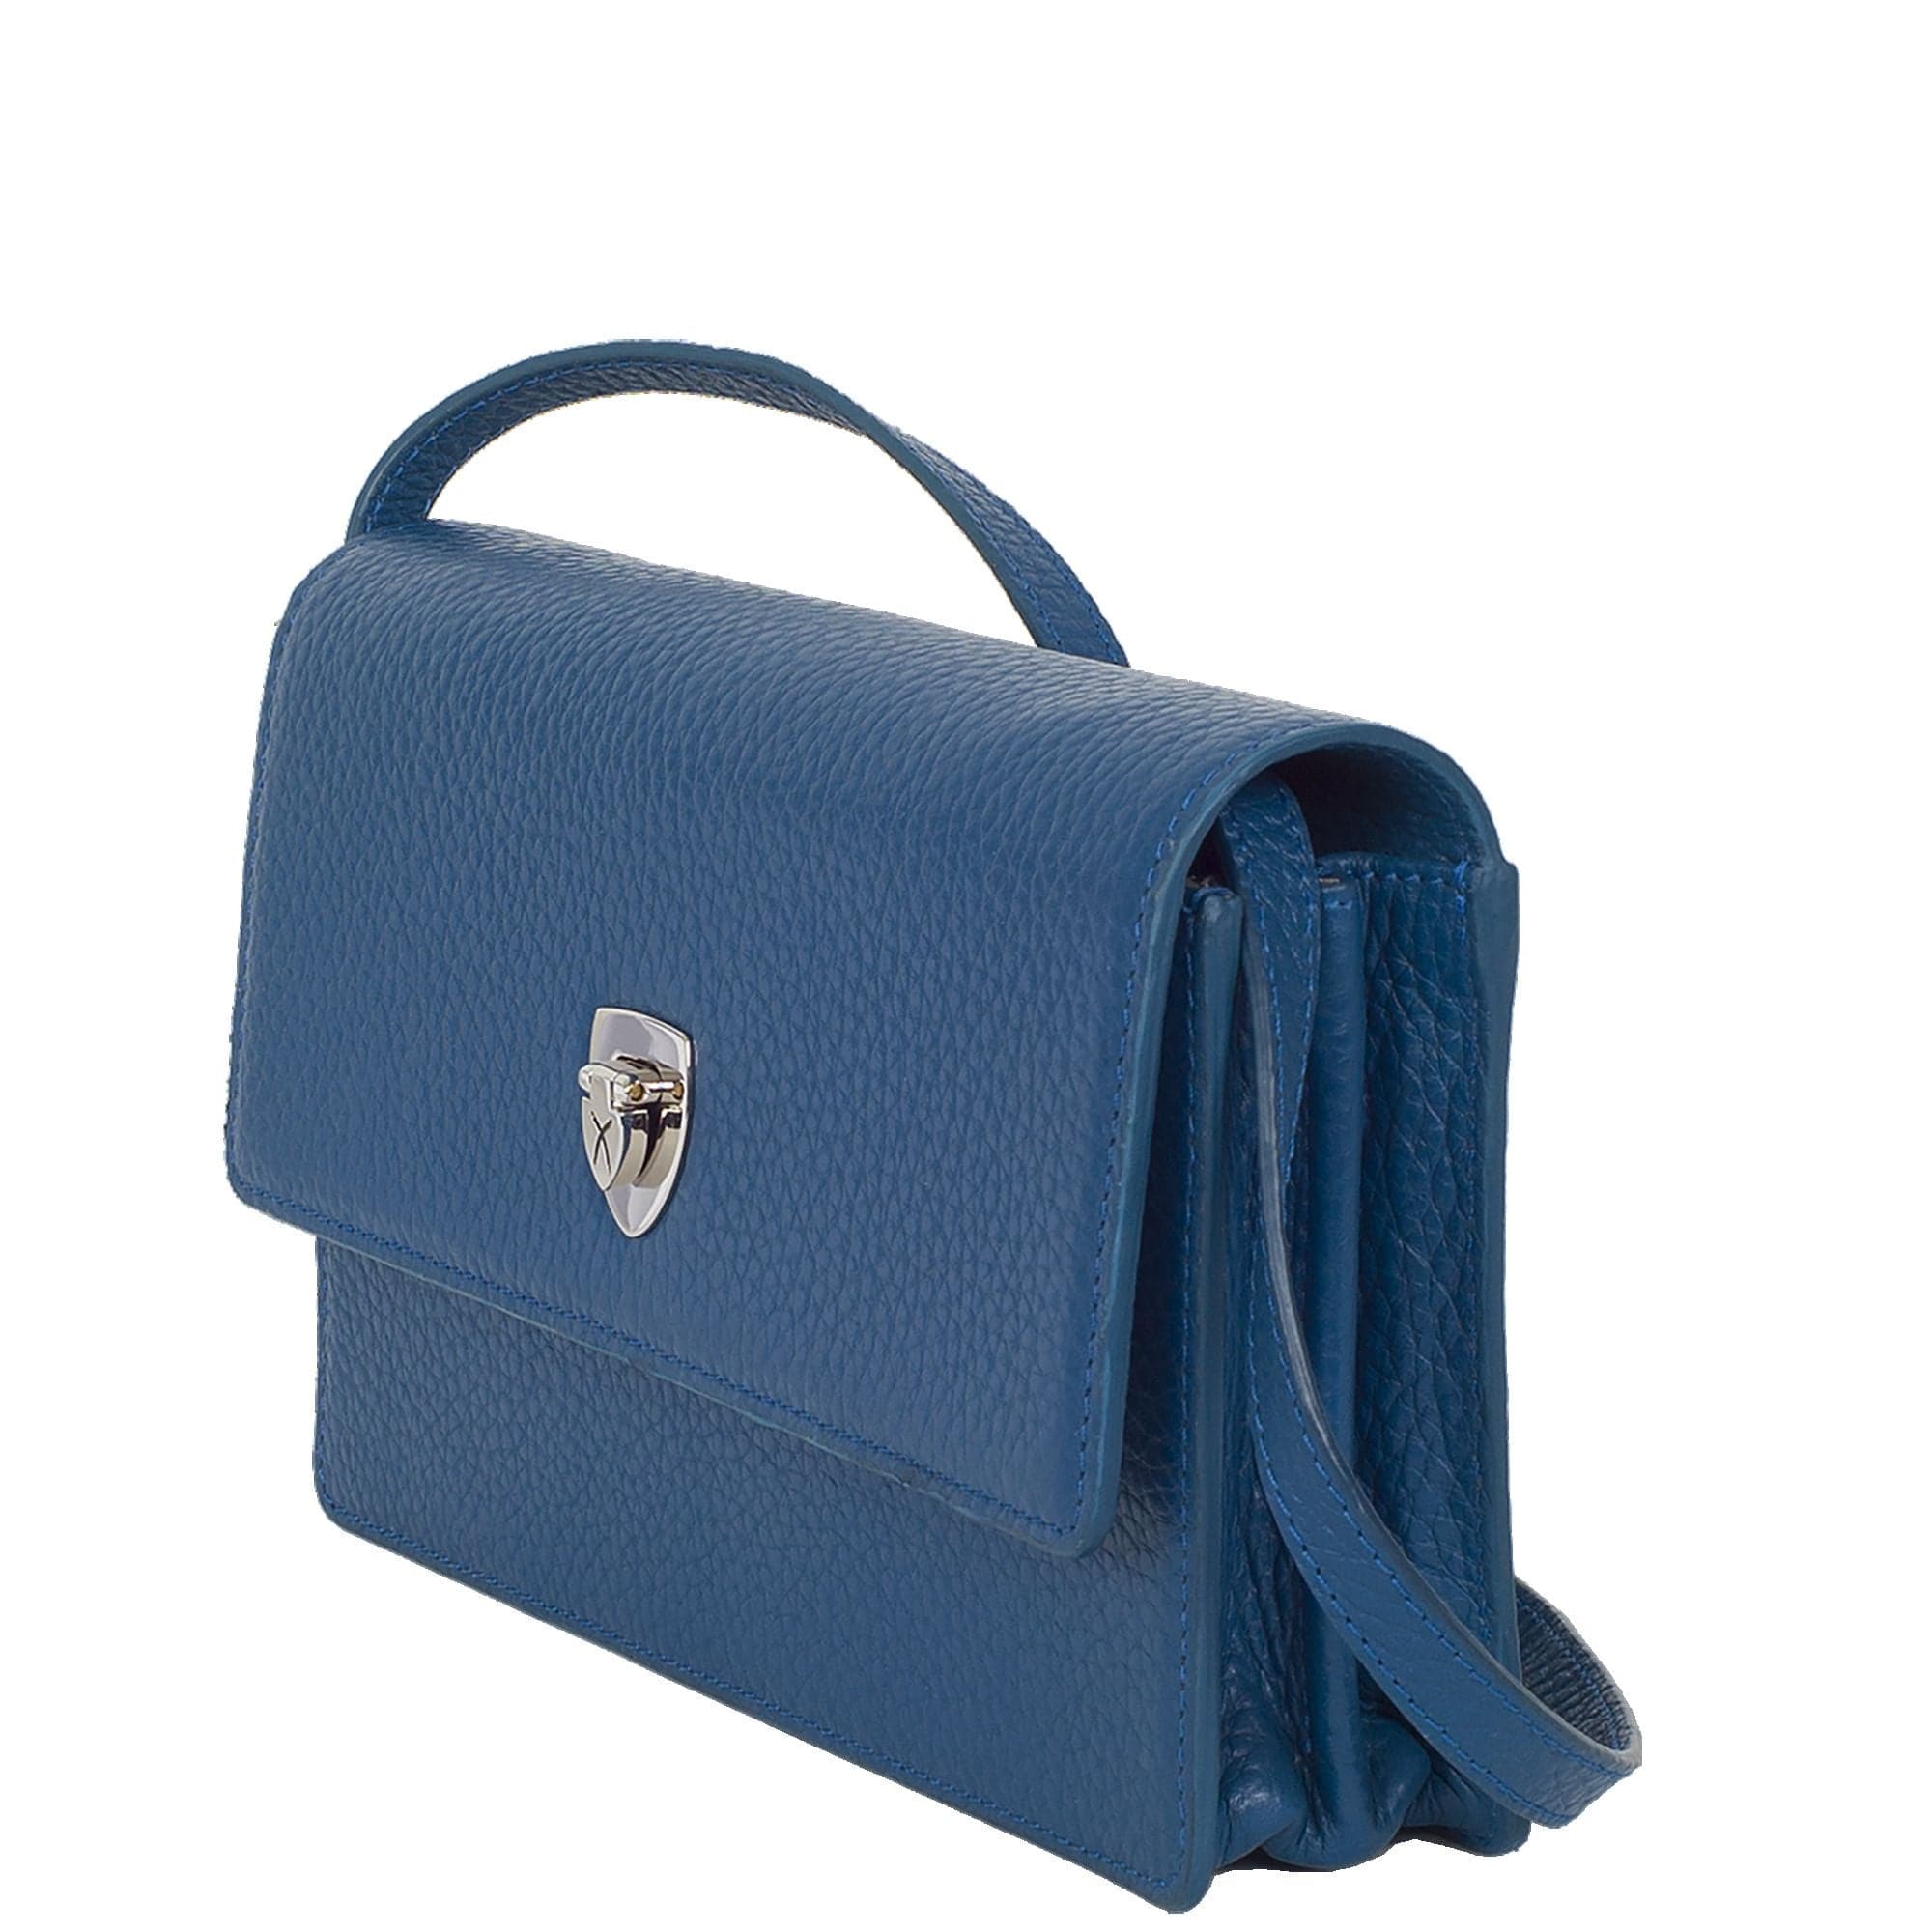 Handtasche Clutch Leder hellblau